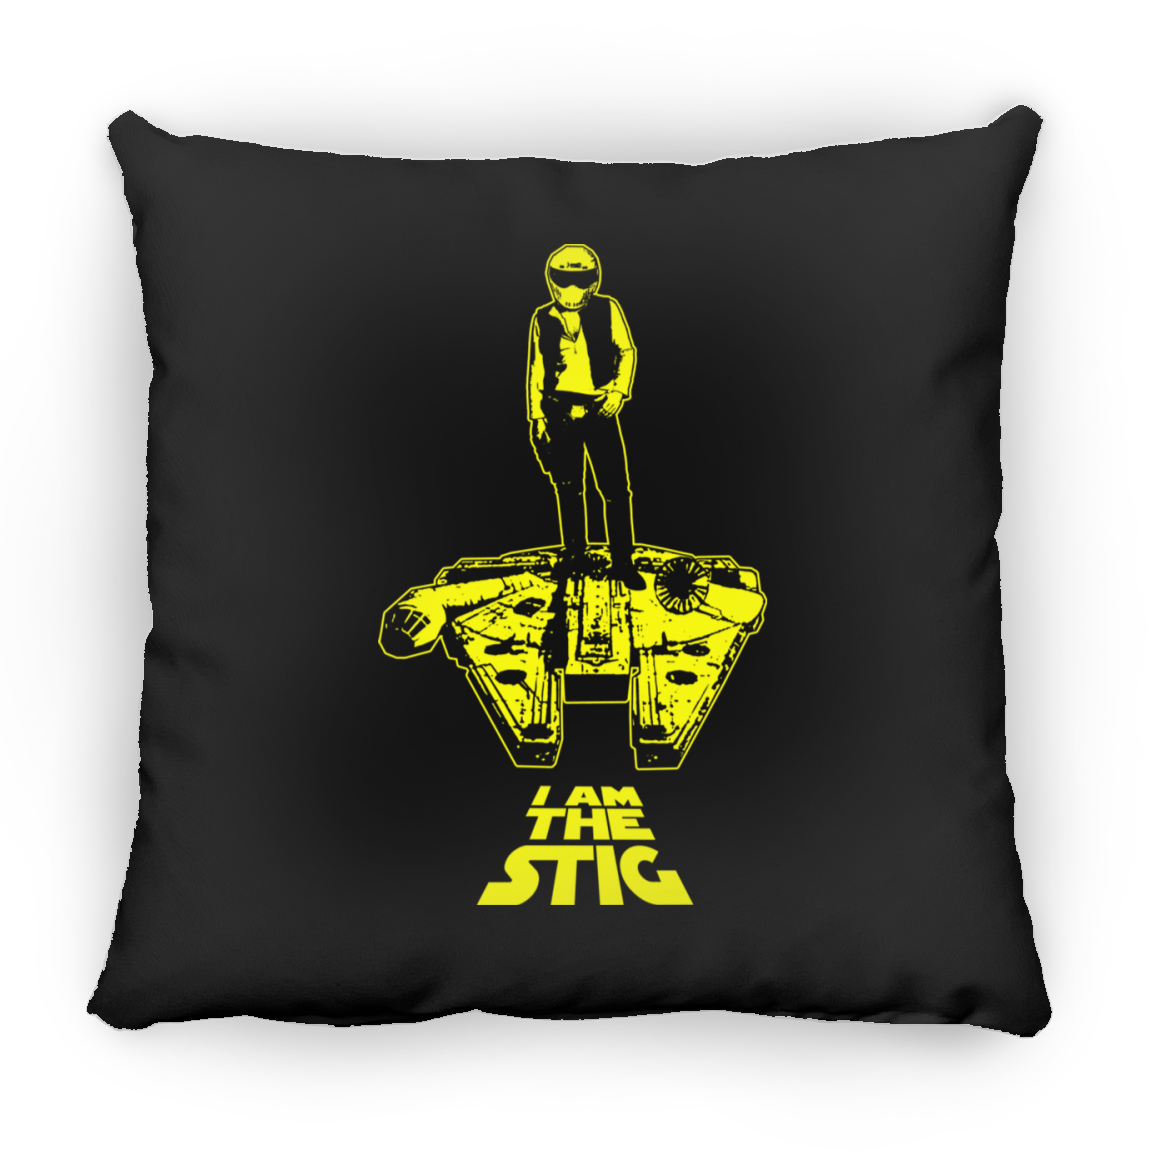 ArtichokeUSA Custom Design. I am the Stig. Han Solo / The Stig Fan Art. Square Pillow 18x18